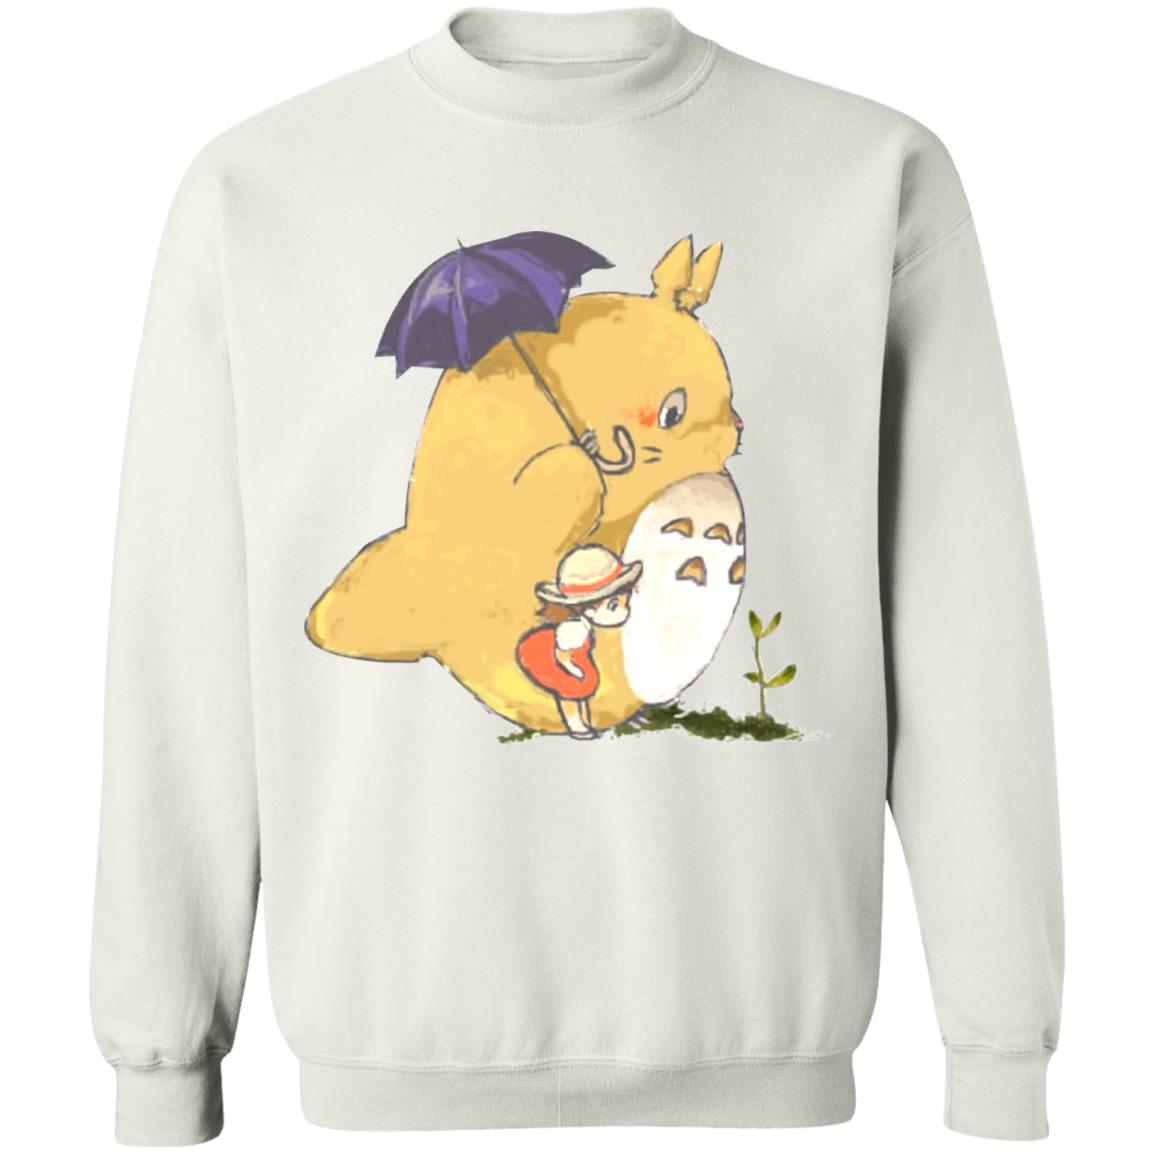 Umbrella Totoro and Mei Sweatshirt